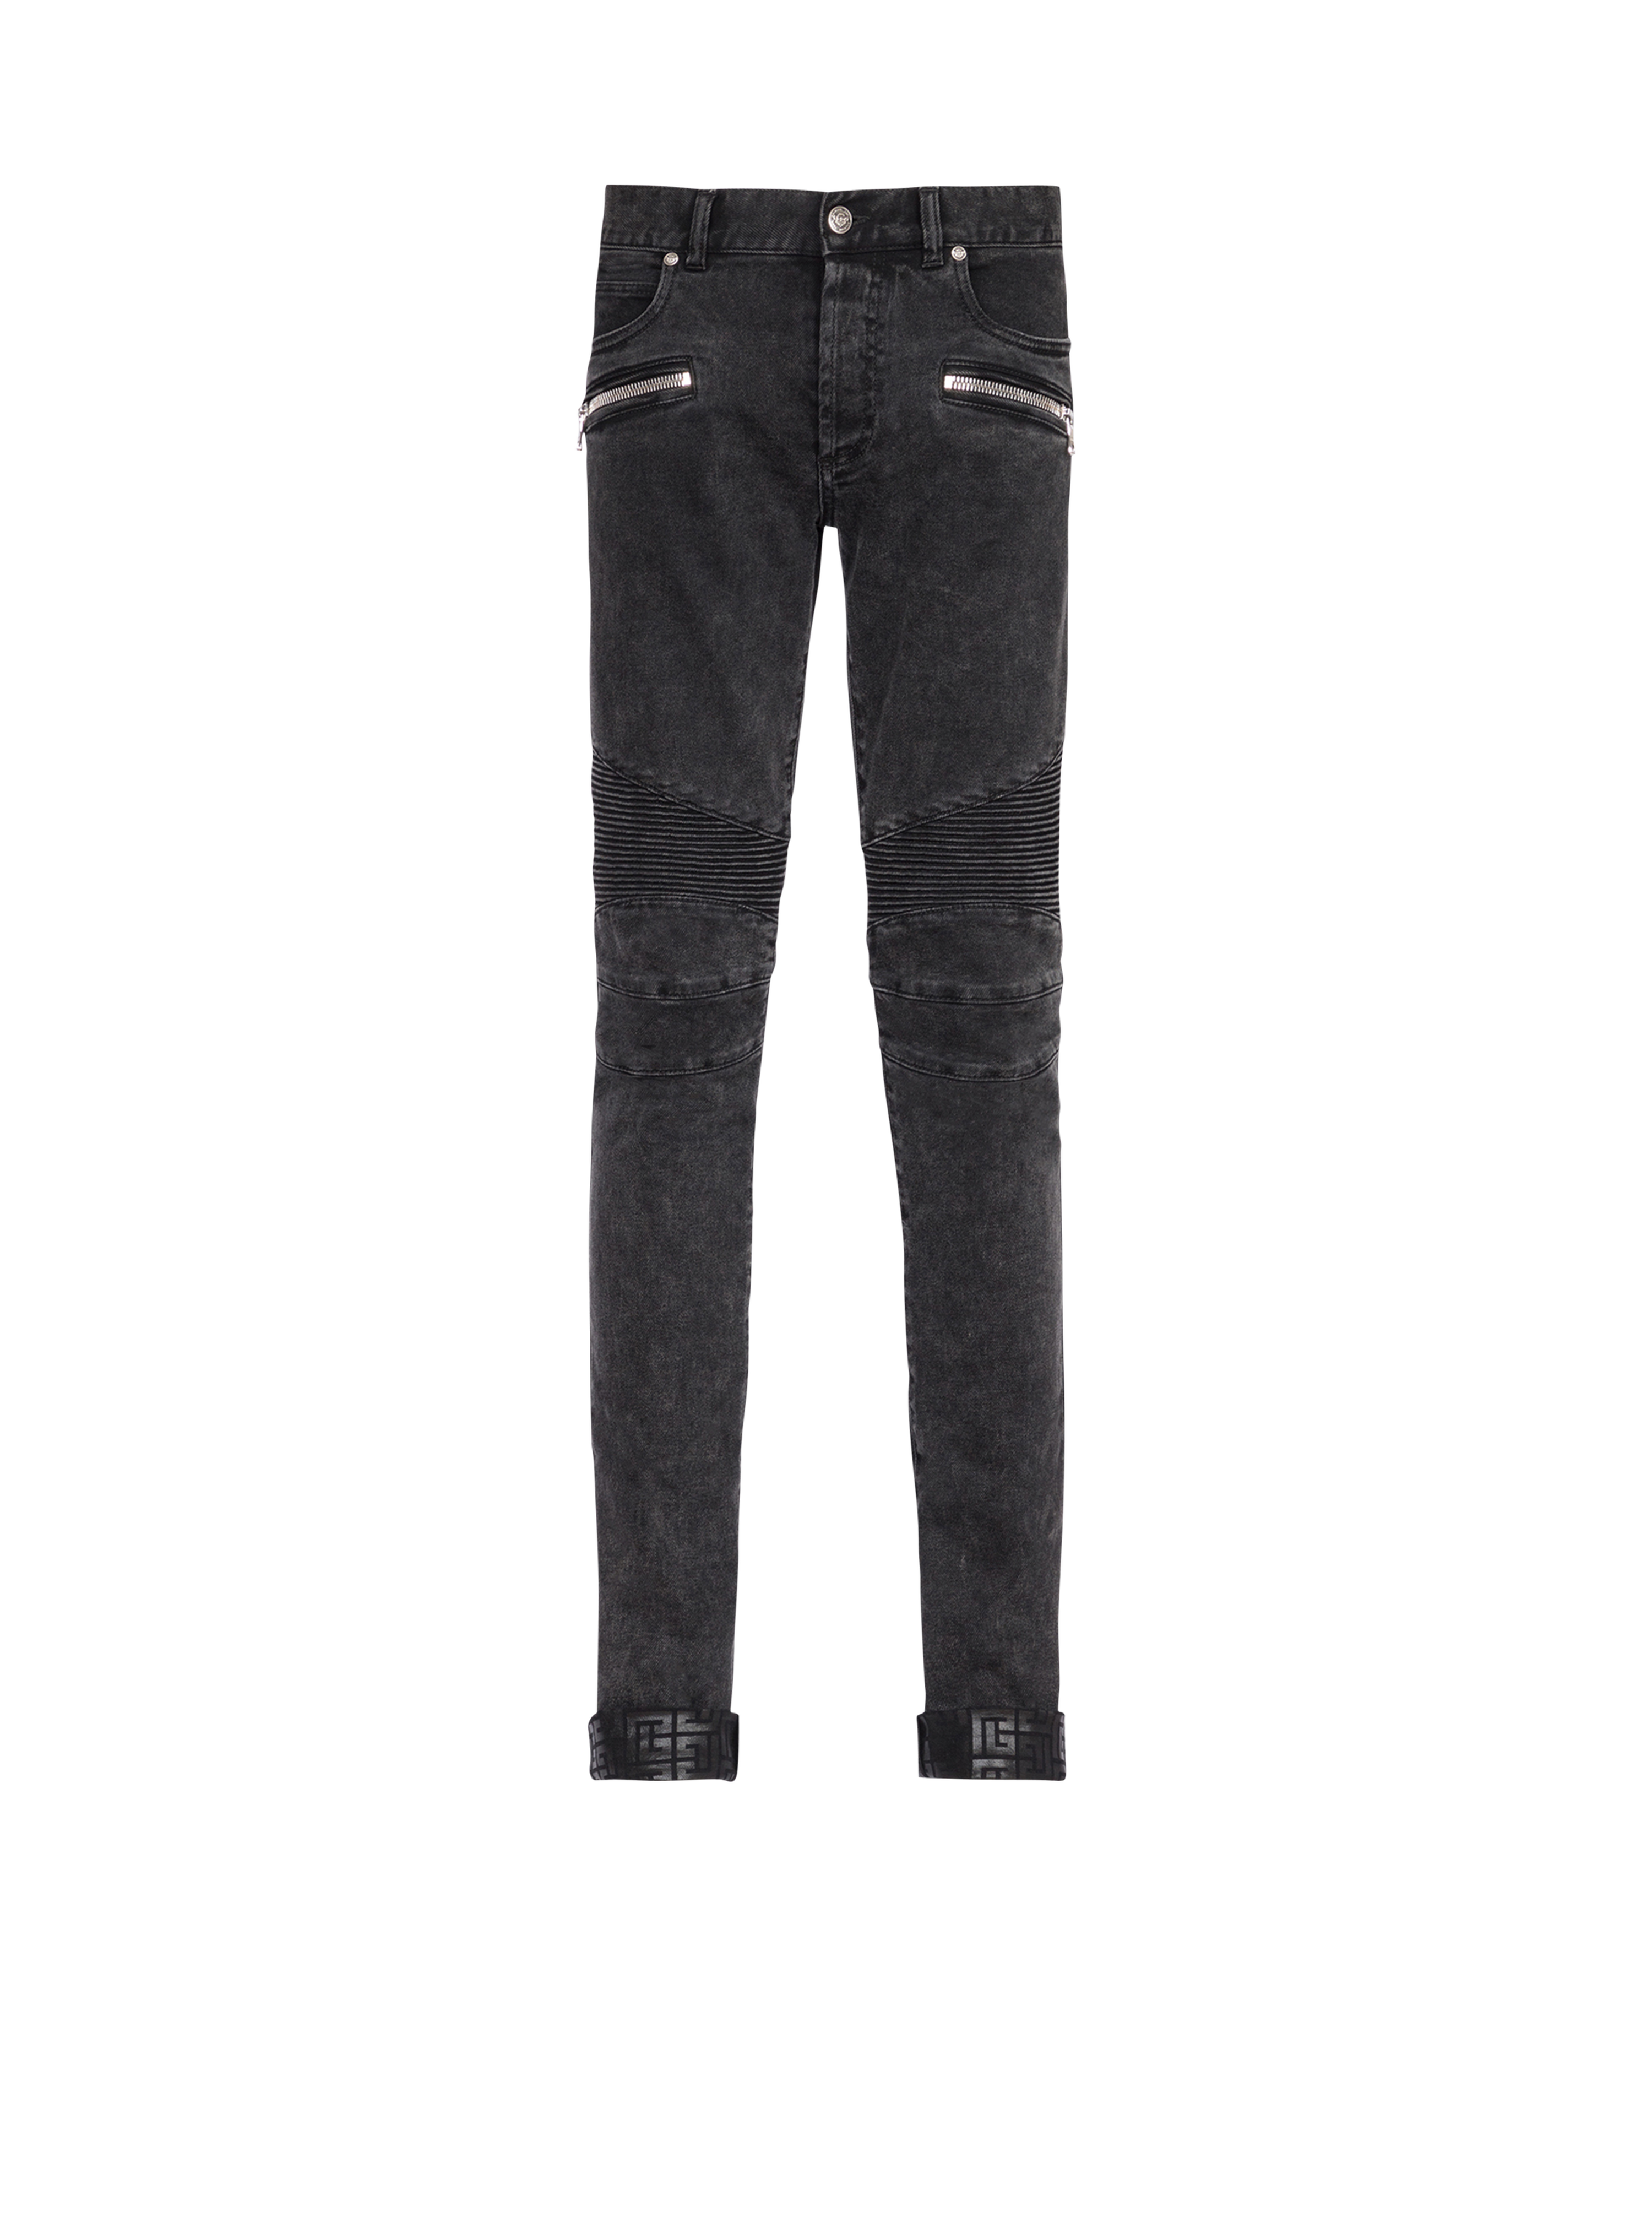 Slim cut ridged cotton jeans with Balmain monogram on hem, black